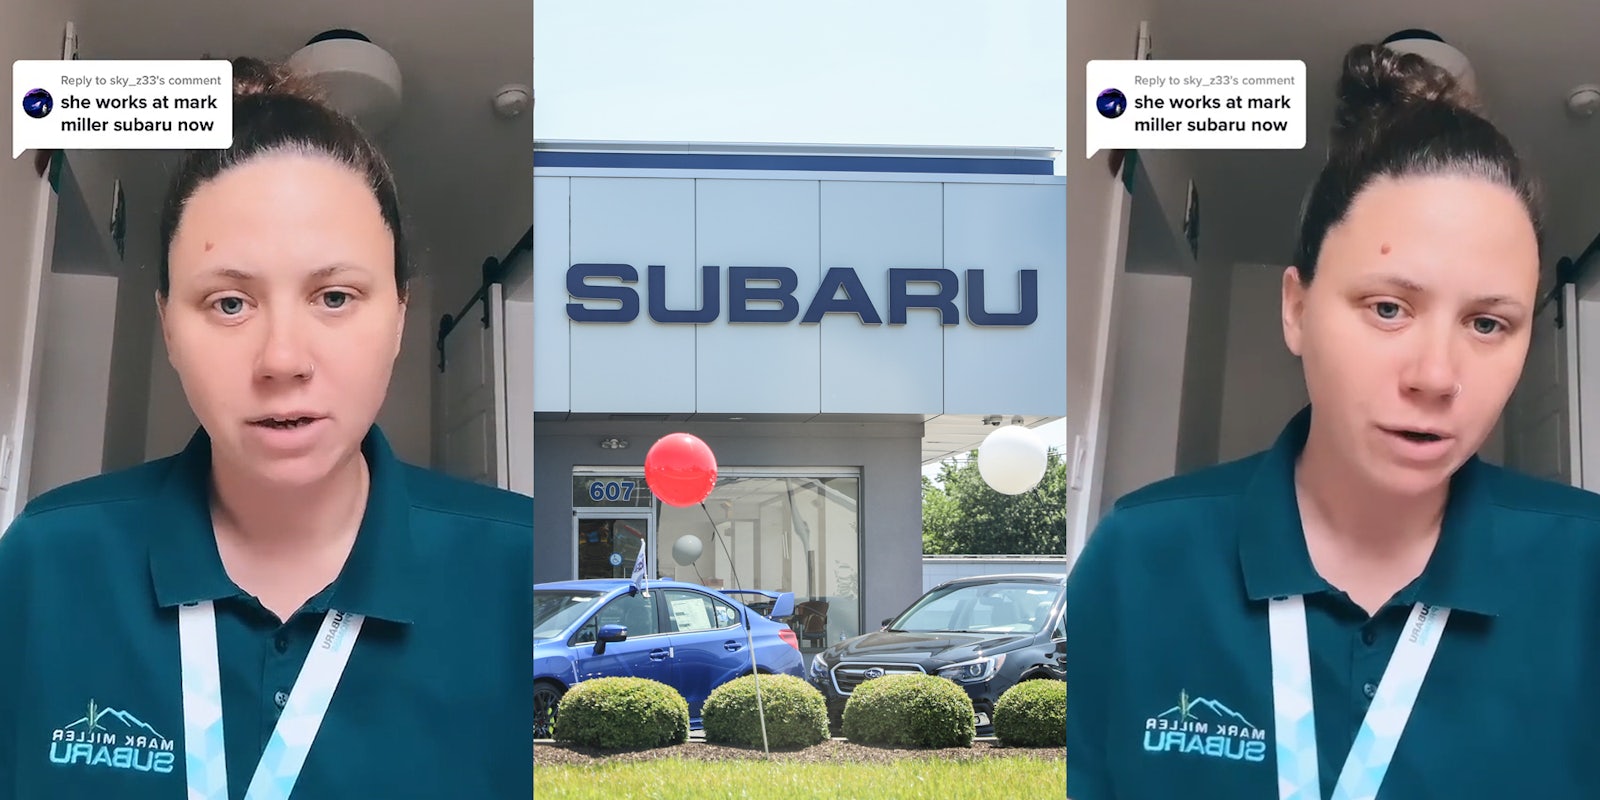 Subaru dealership worker in uniform speaking caption 'she works at mark miller subaru now' (l) Subaru dealership (c) Subaru dealership worker in uniform speaking caption 'she works at mark miller subaru now' (r)